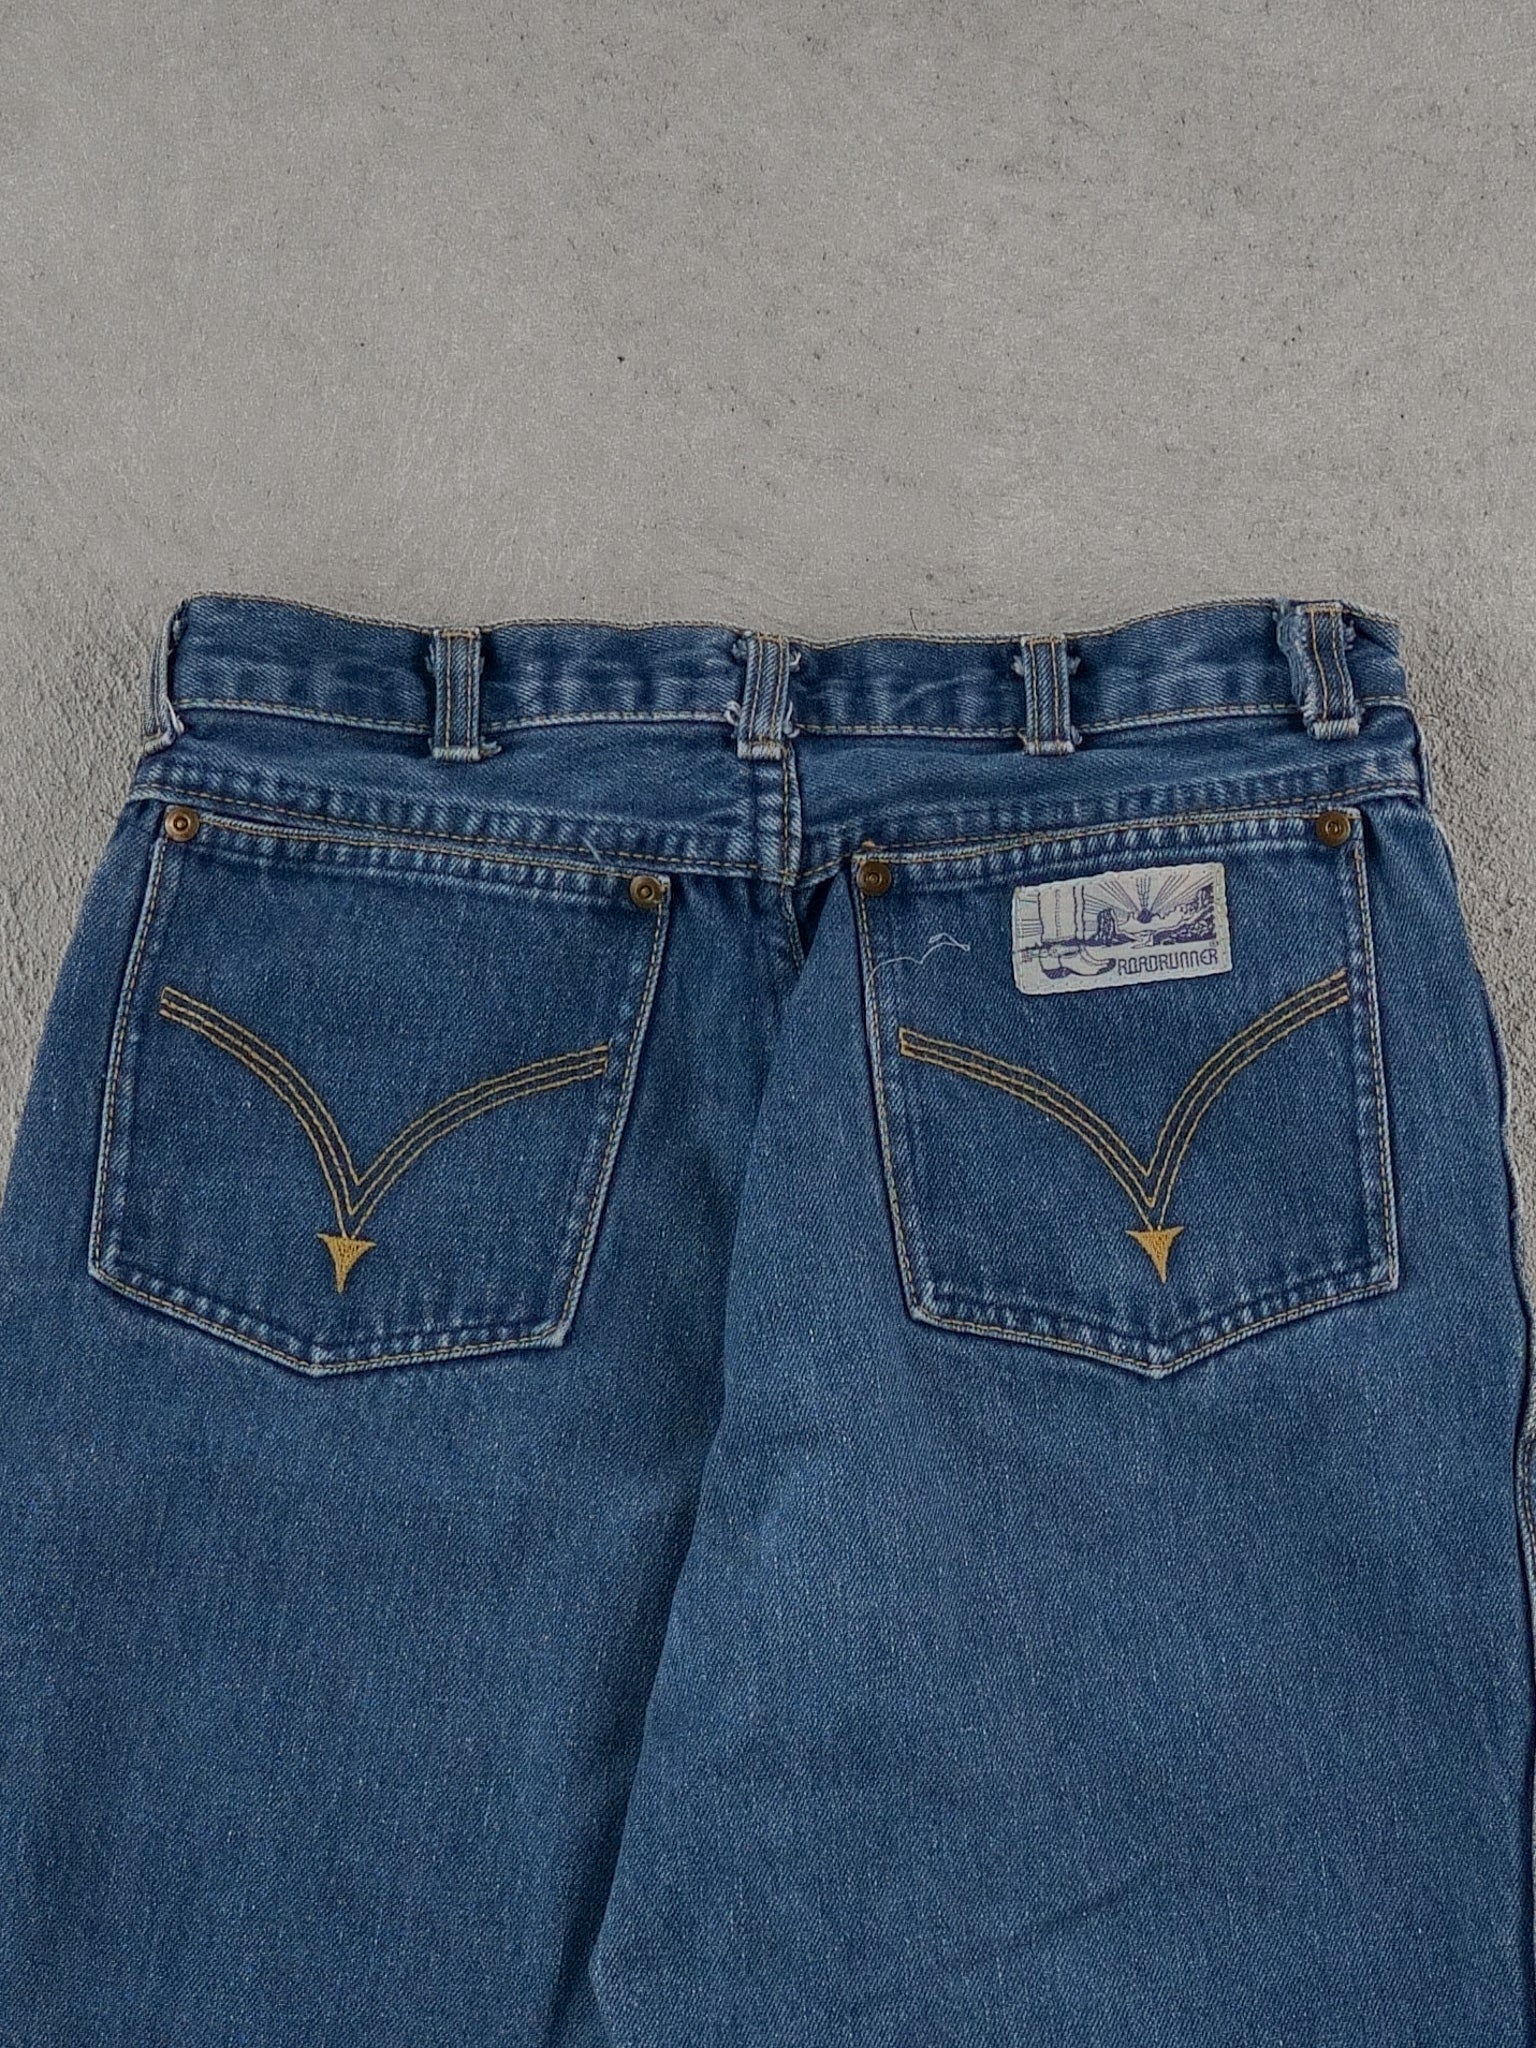 Vintage 80s Blue Roadrunner Denim Jeans (28x35)